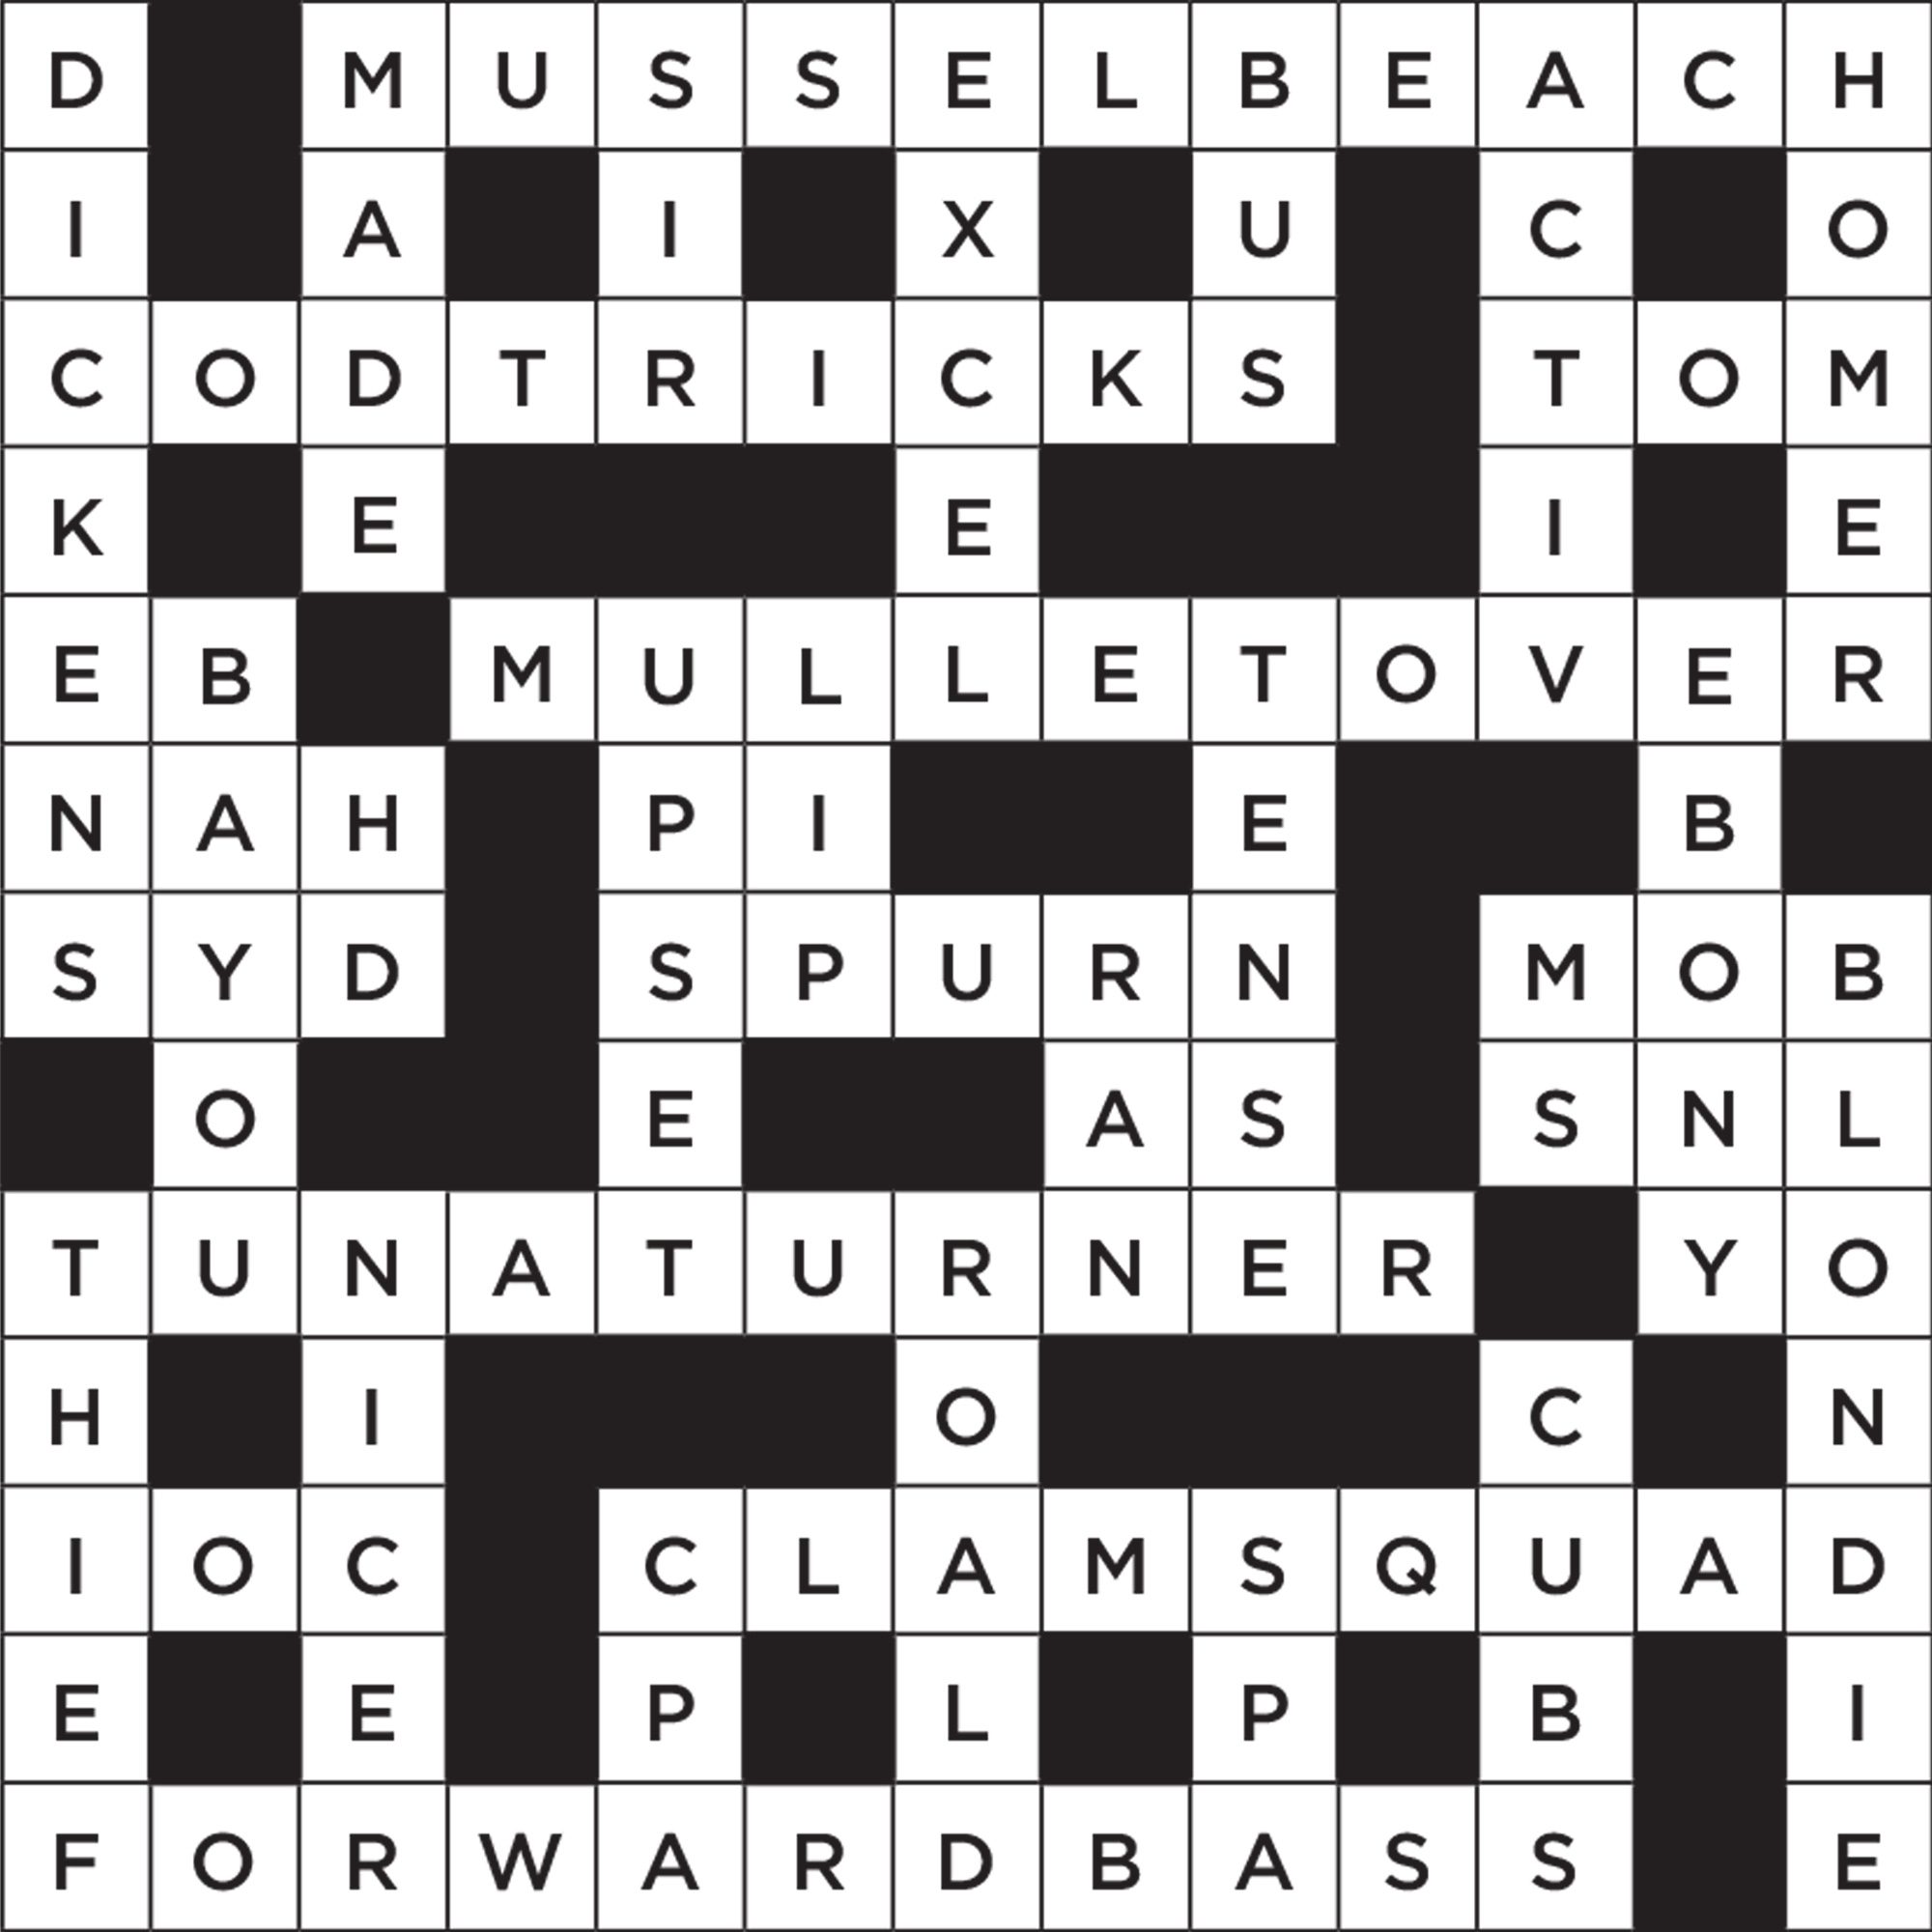 sea life puns crossword themed puzzle